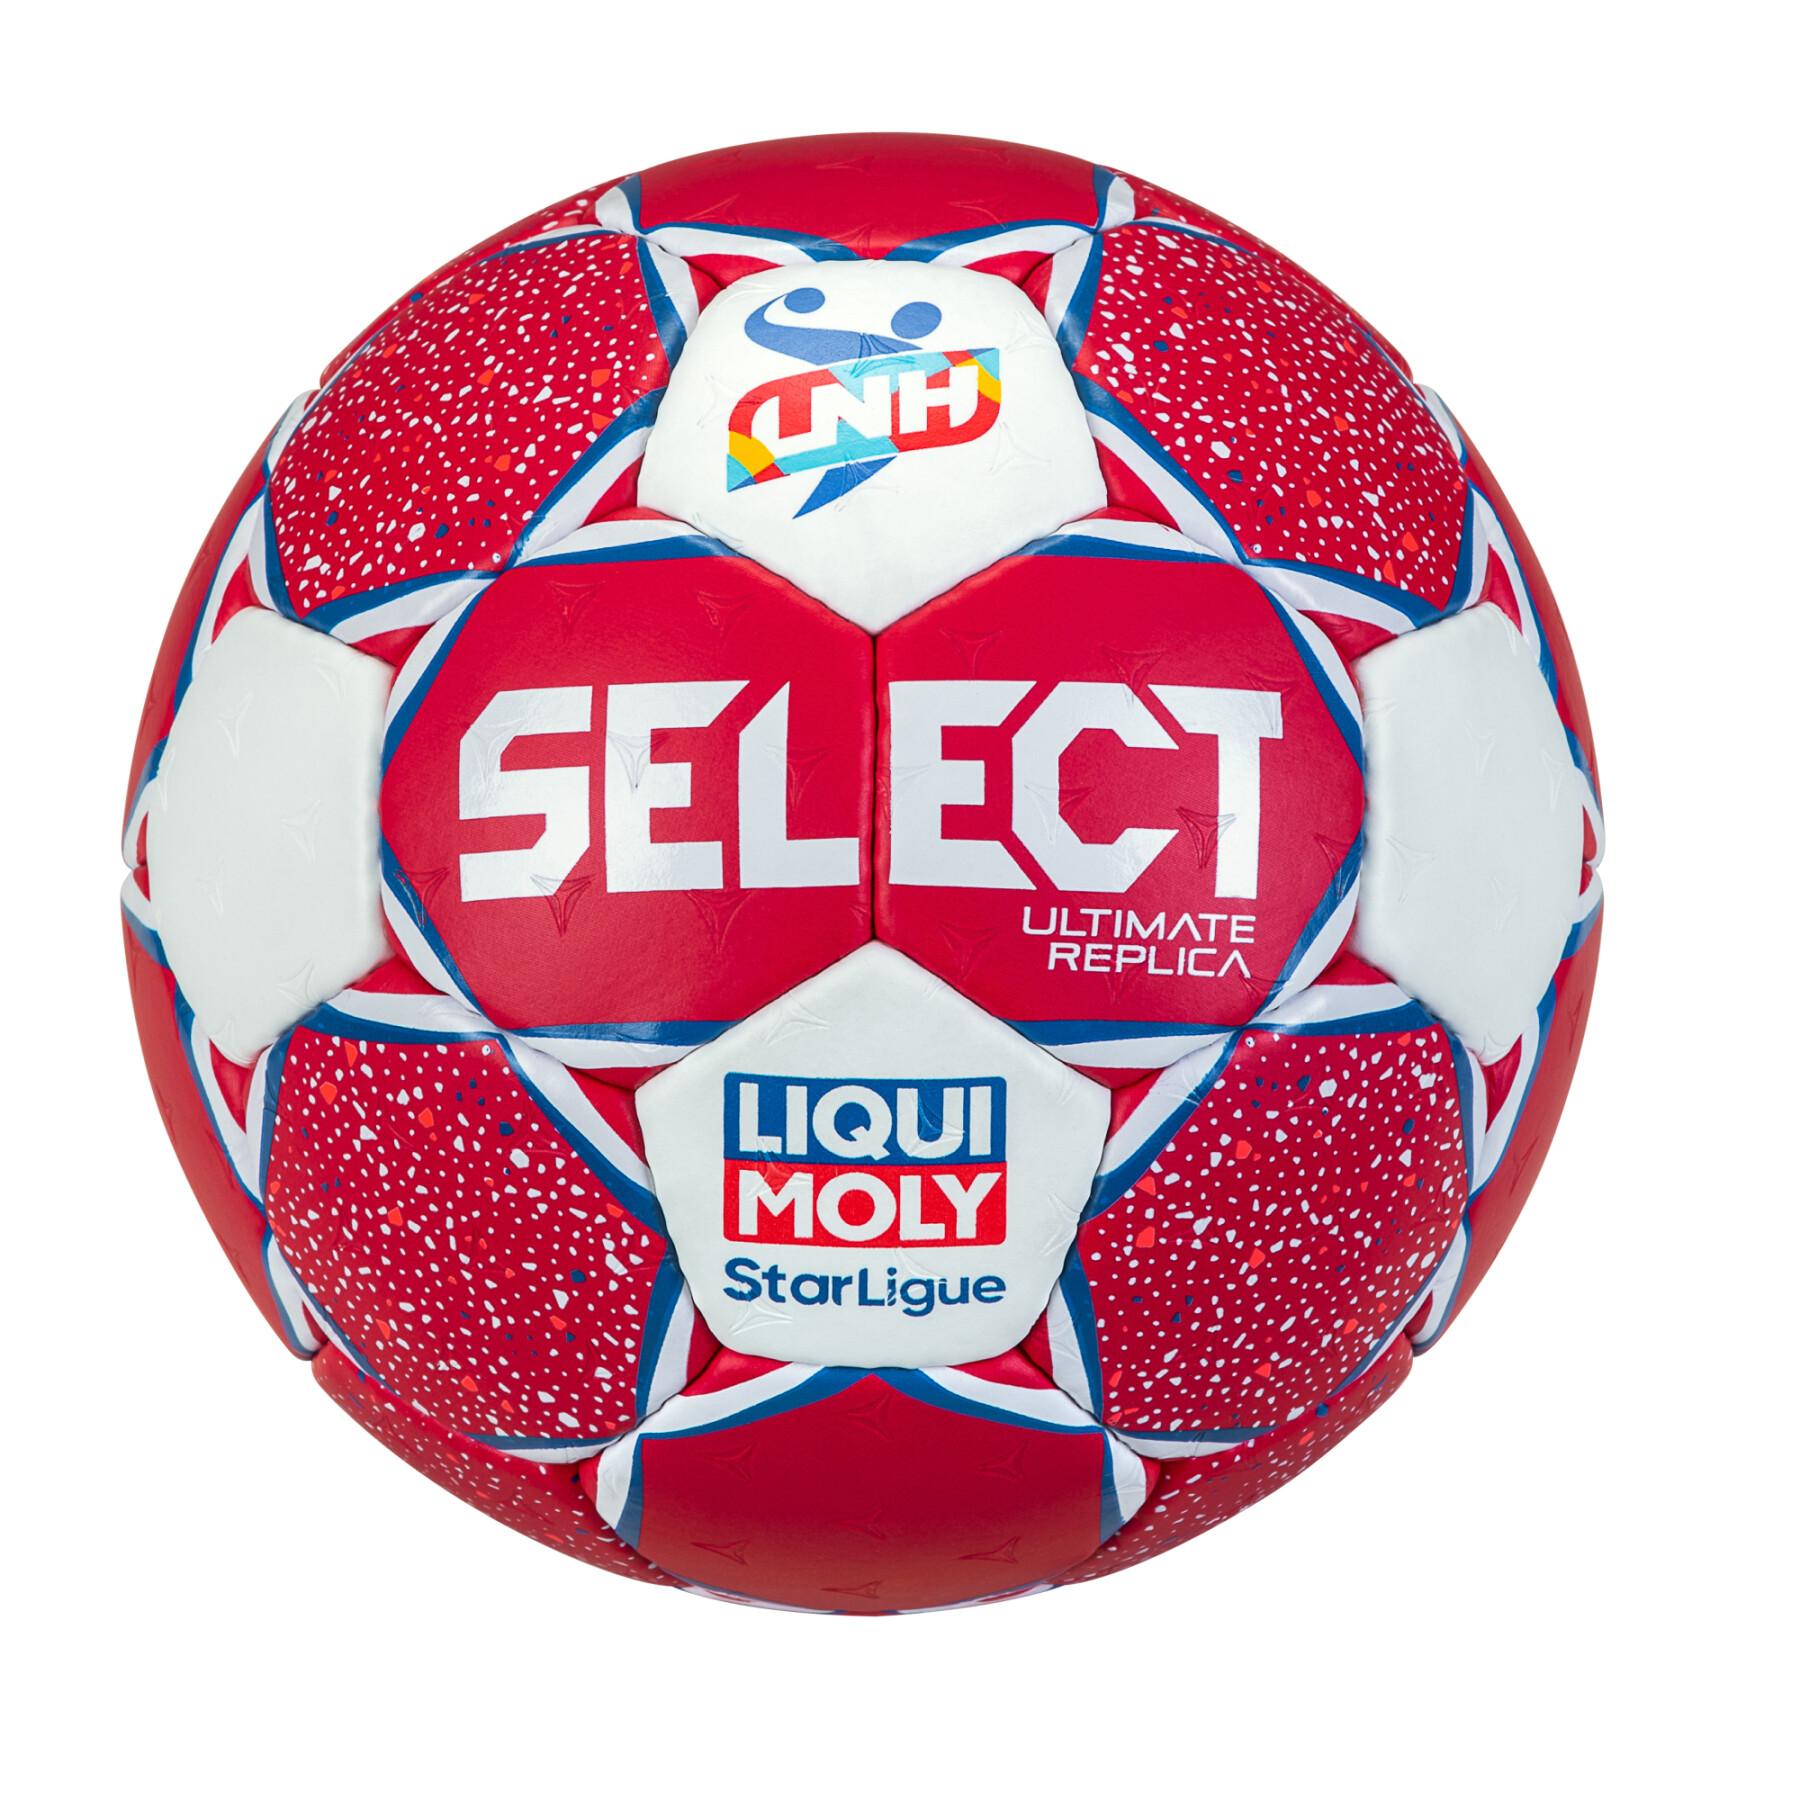 Piłka ręczna Select Ultimate Replica LNH